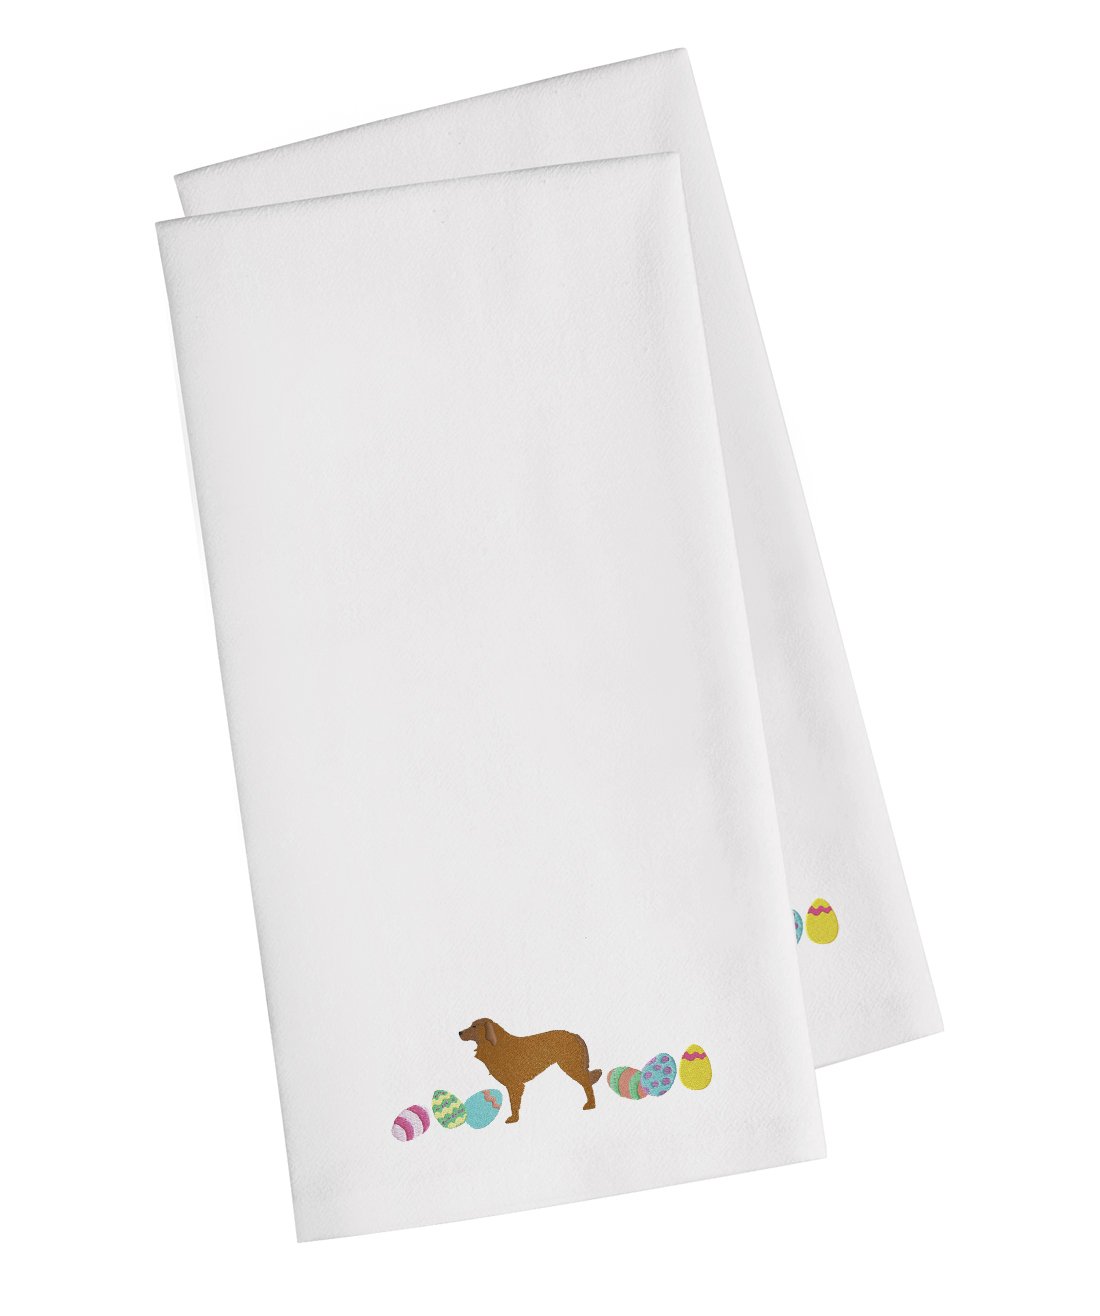 Estrela Mountain Dog Easter White Embroidered Kitchen Towel Set of 2 CK1674WHTWE by Caroline's Treasures